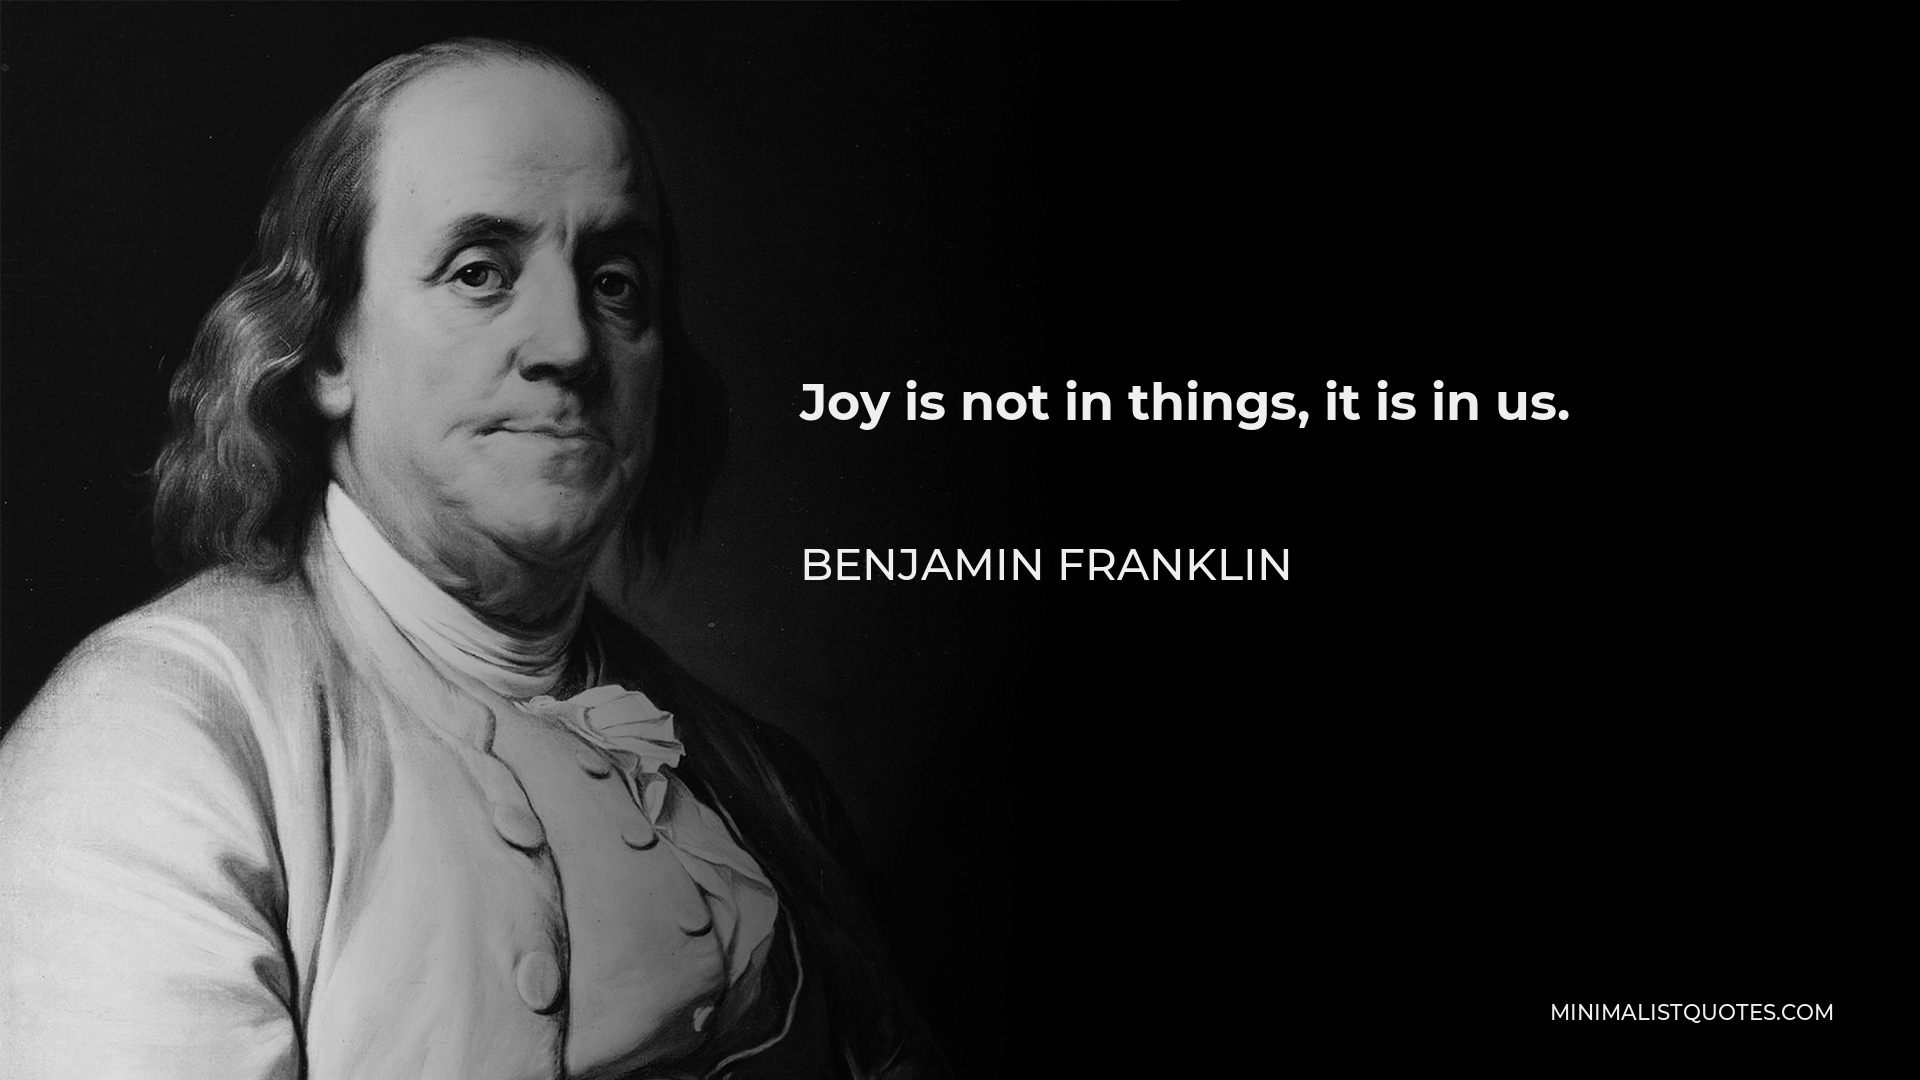 Benjamin Franklin Quote - Joy is not in things, it is in us.